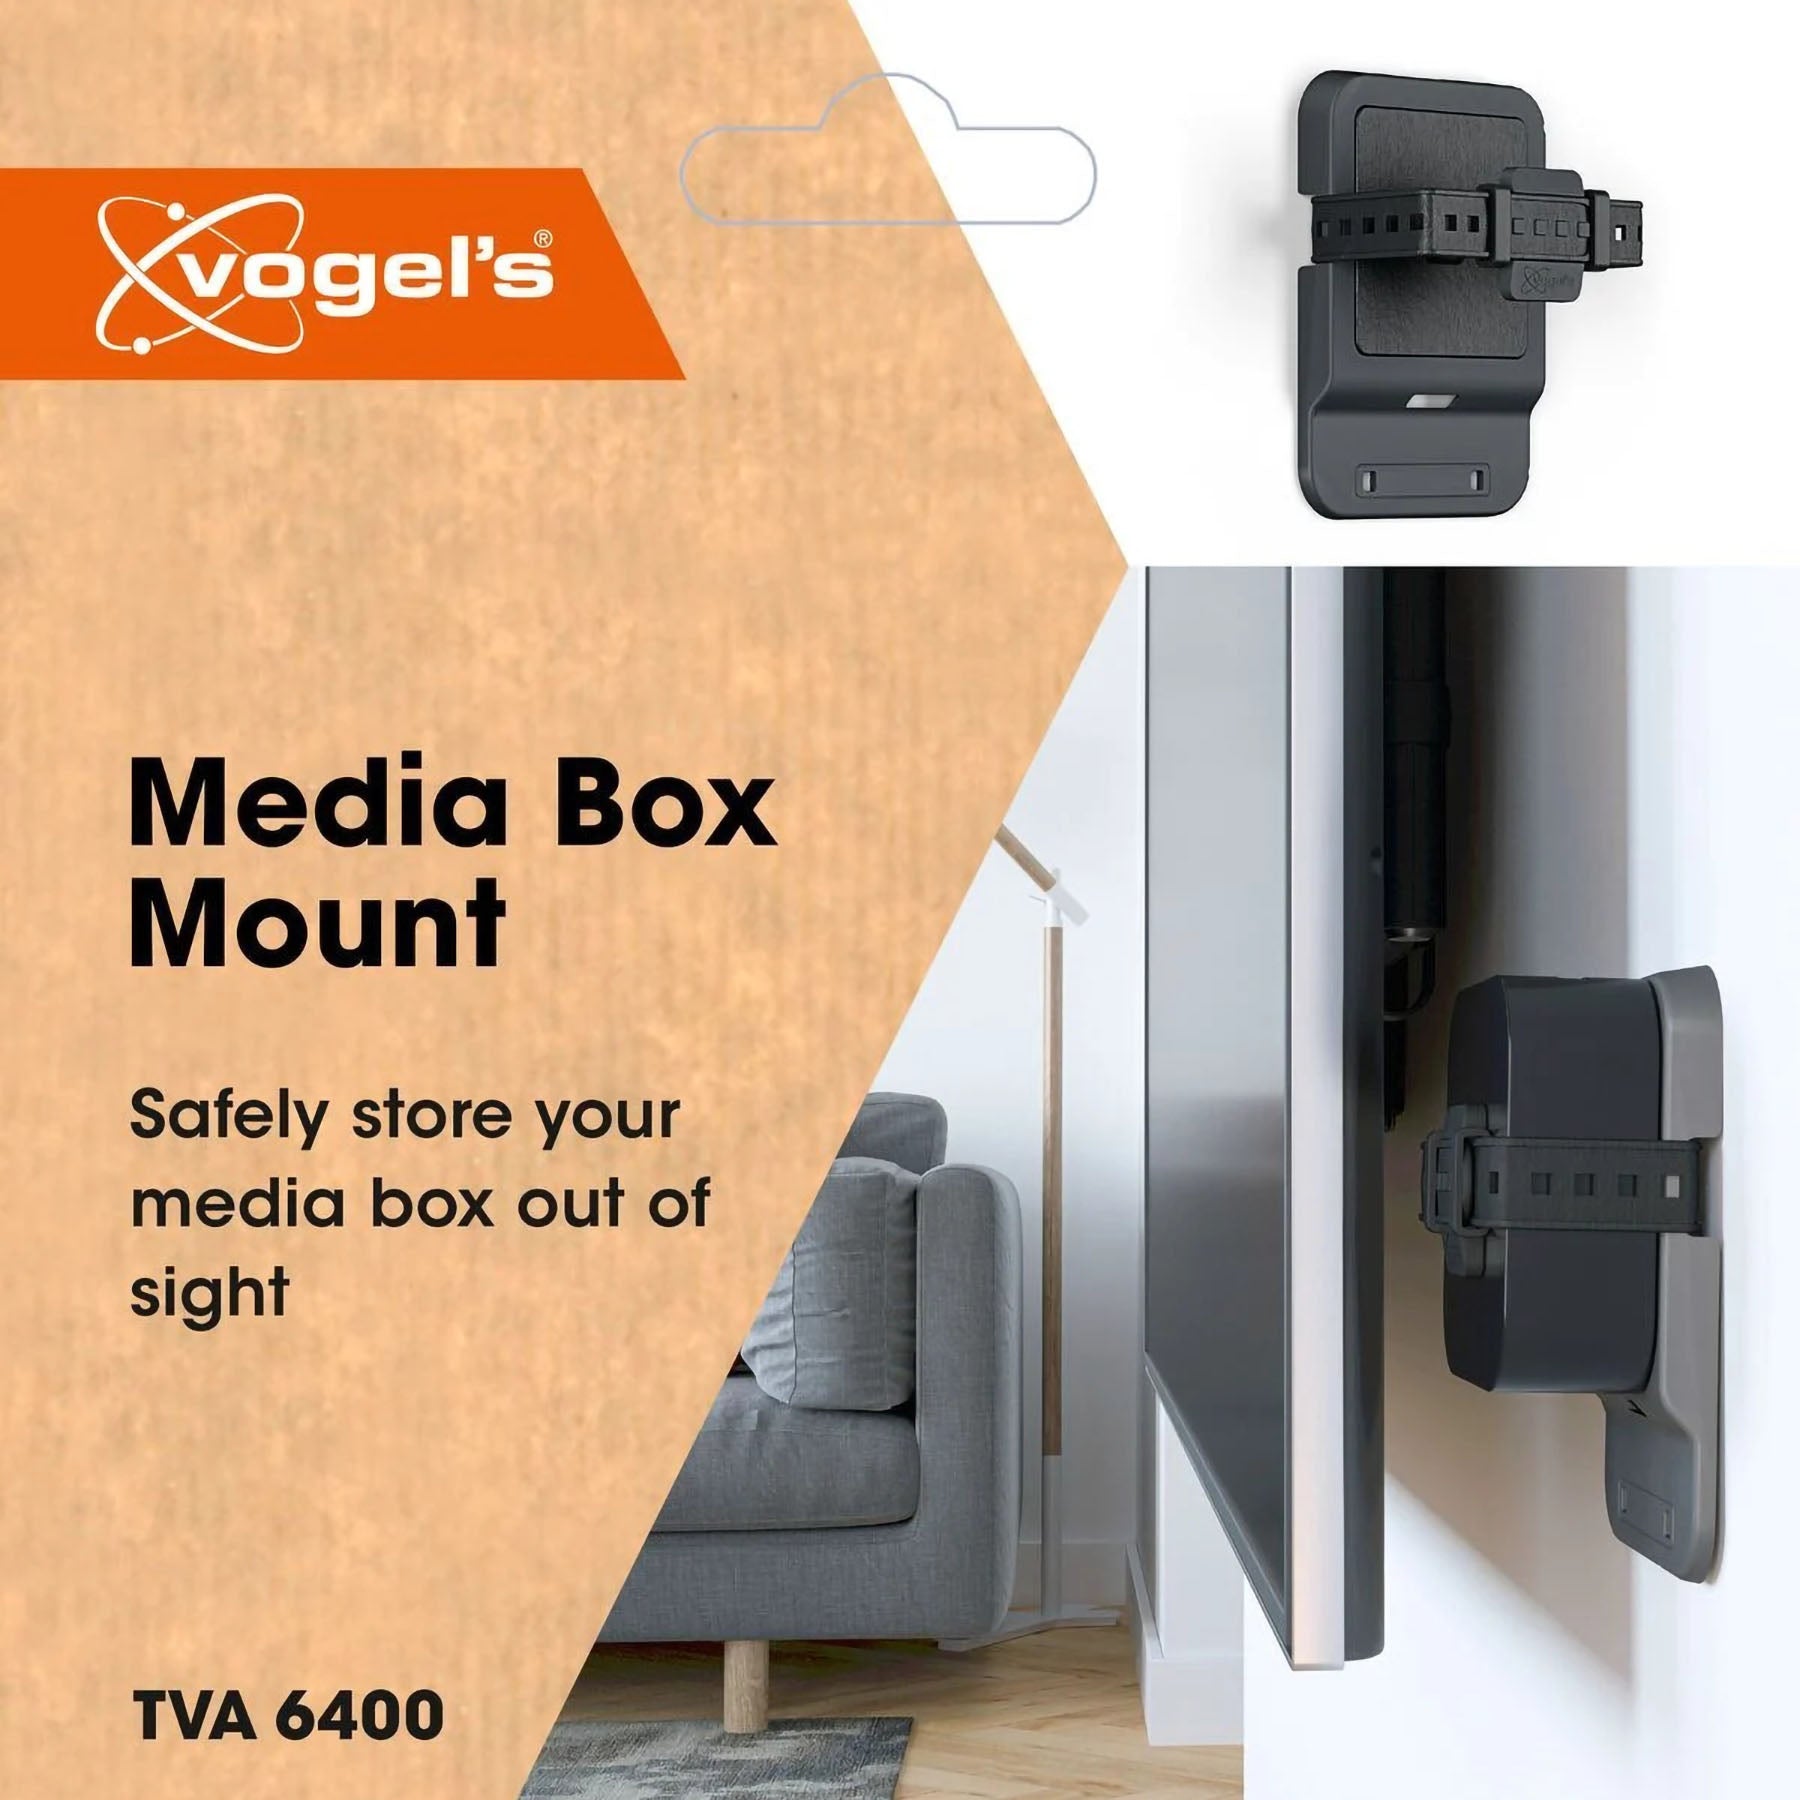 Vogel's TVA 6400 Media Box Mount